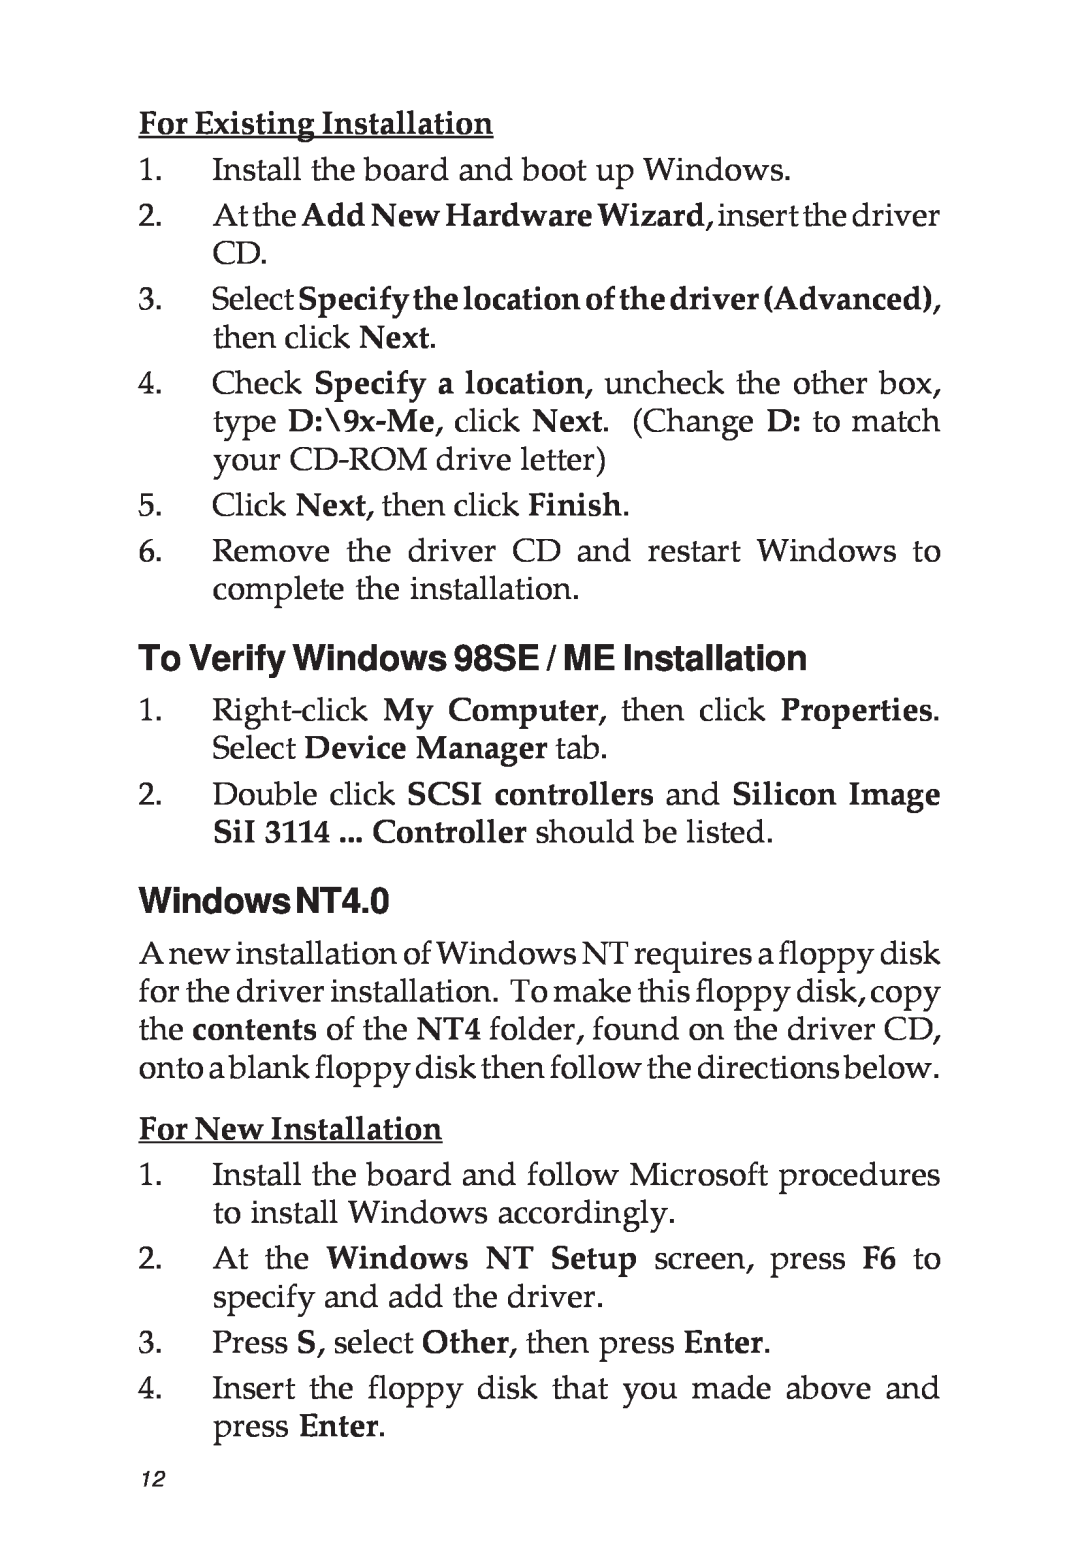 SIIG 04-0322C To Verify Windows 98SE / ME Installation, WindowsNT4.0, For Existing Installation, For New Installation 